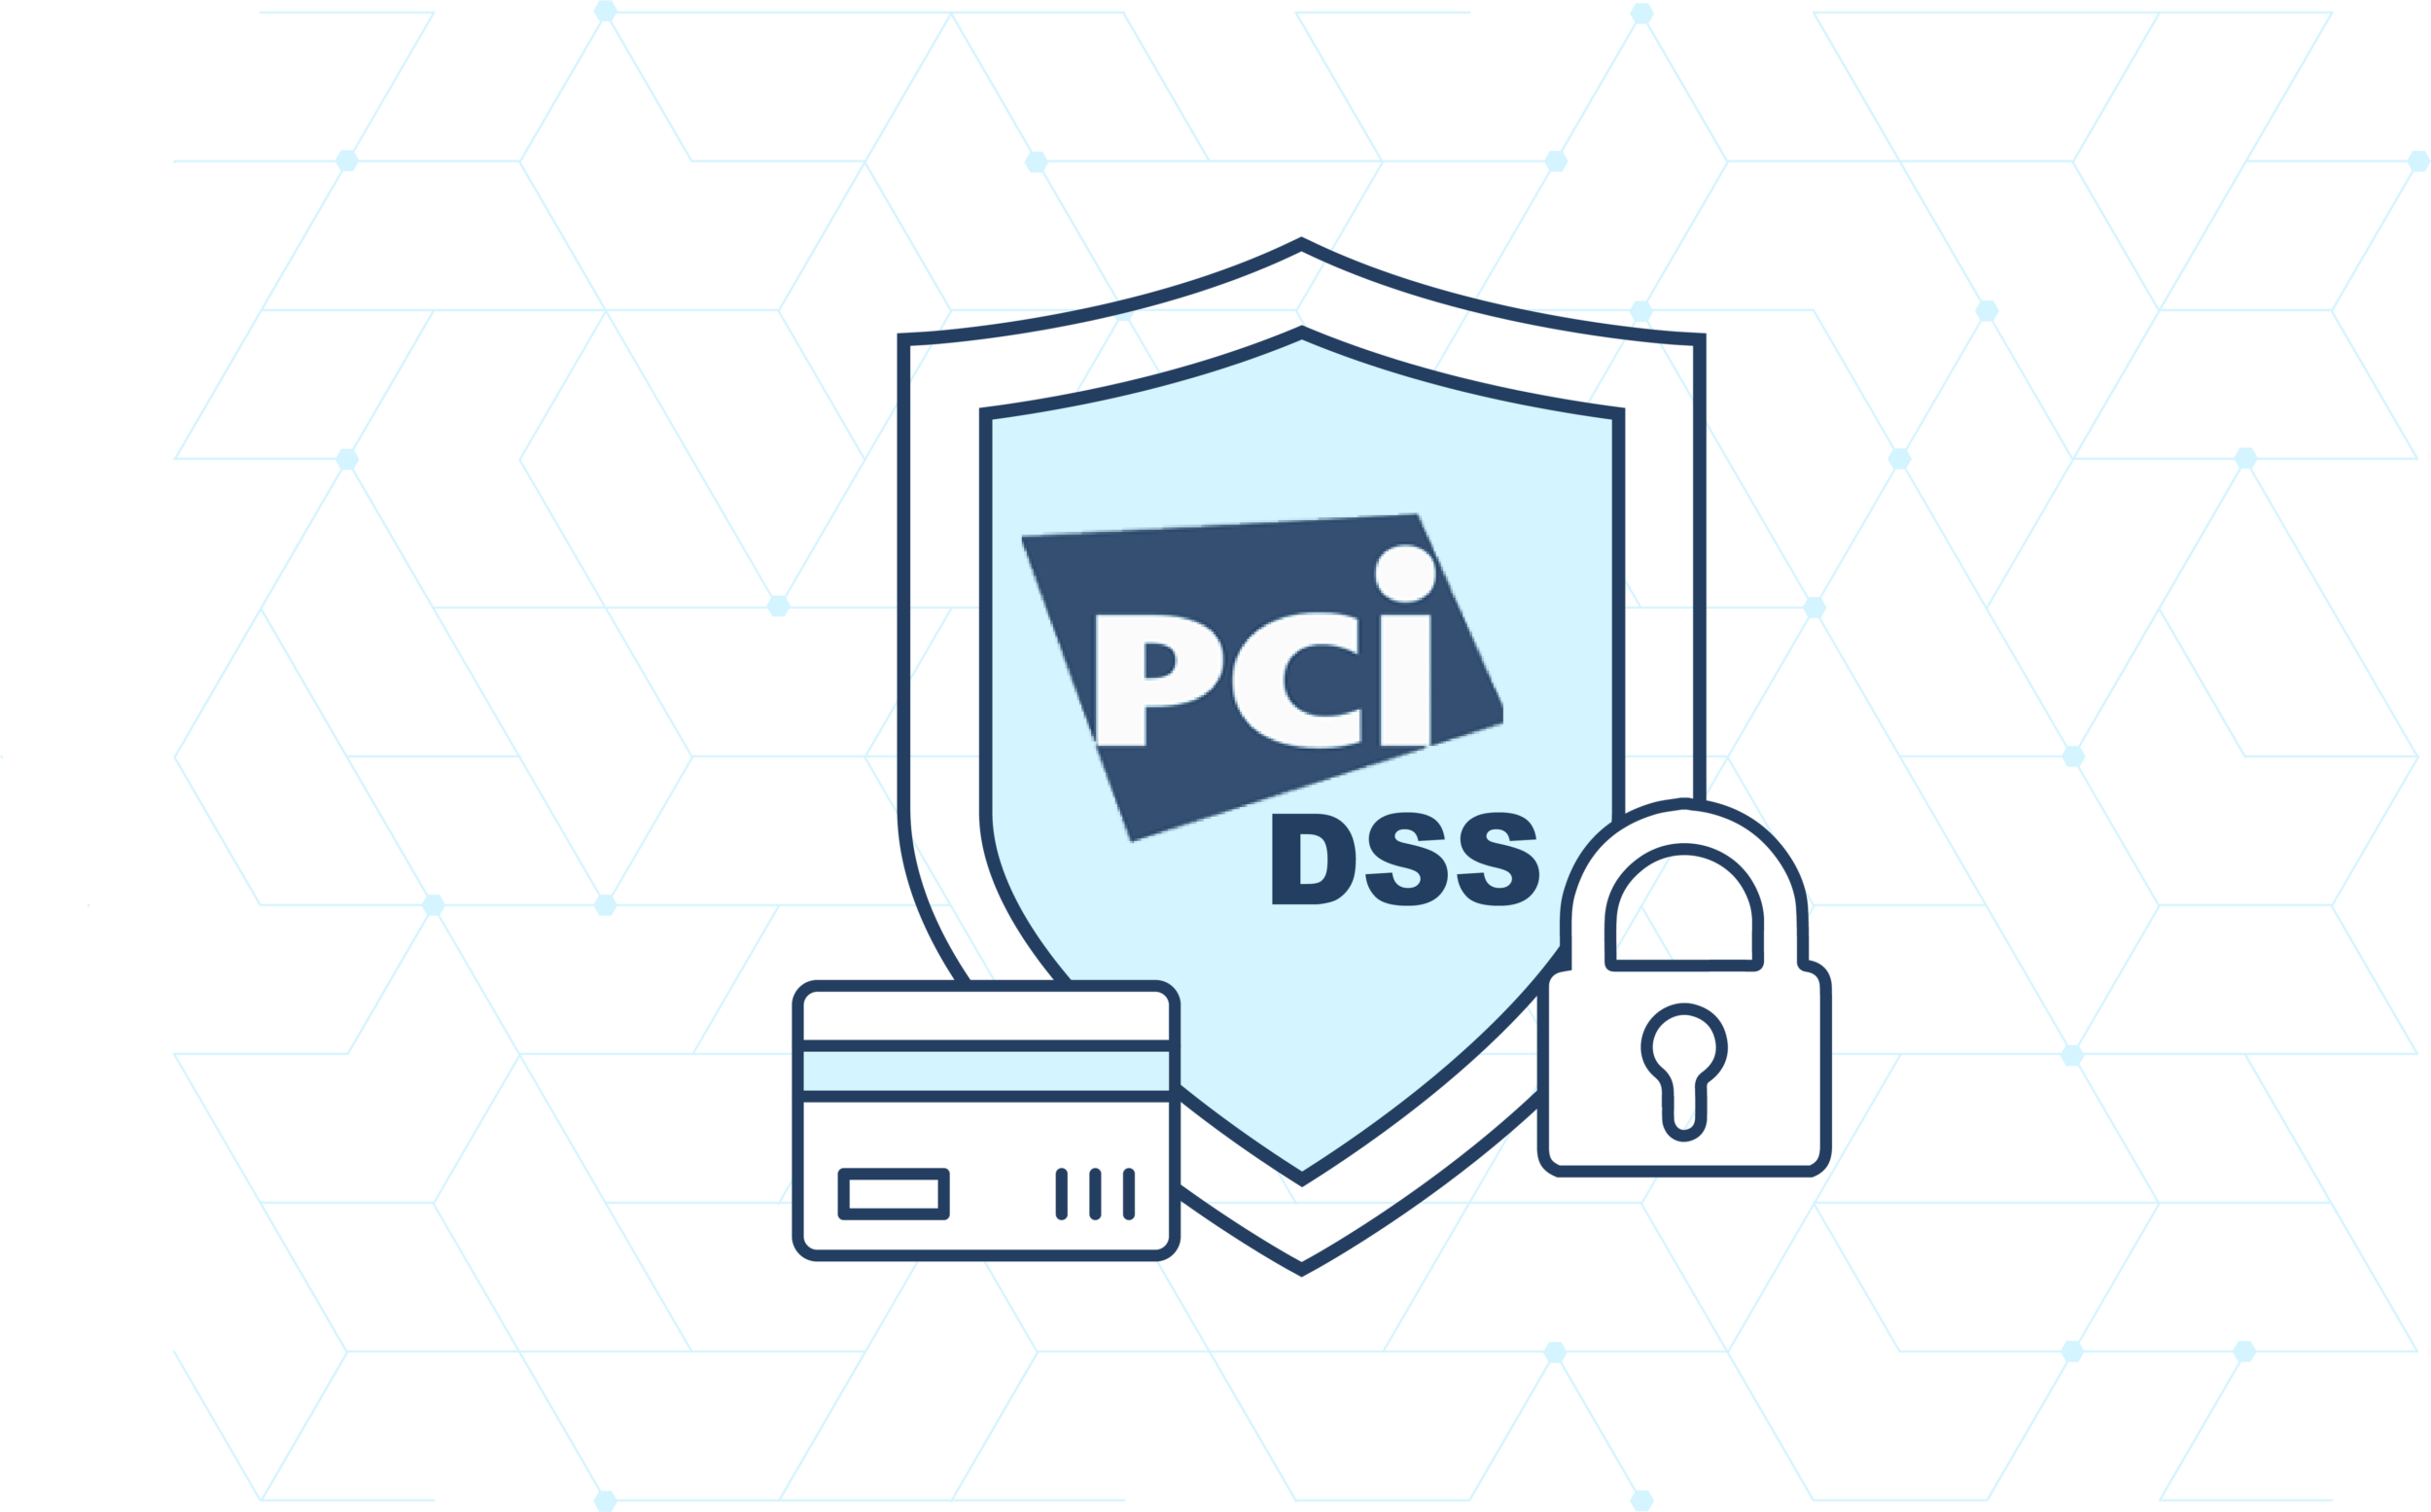 PCI DSS certified vendor